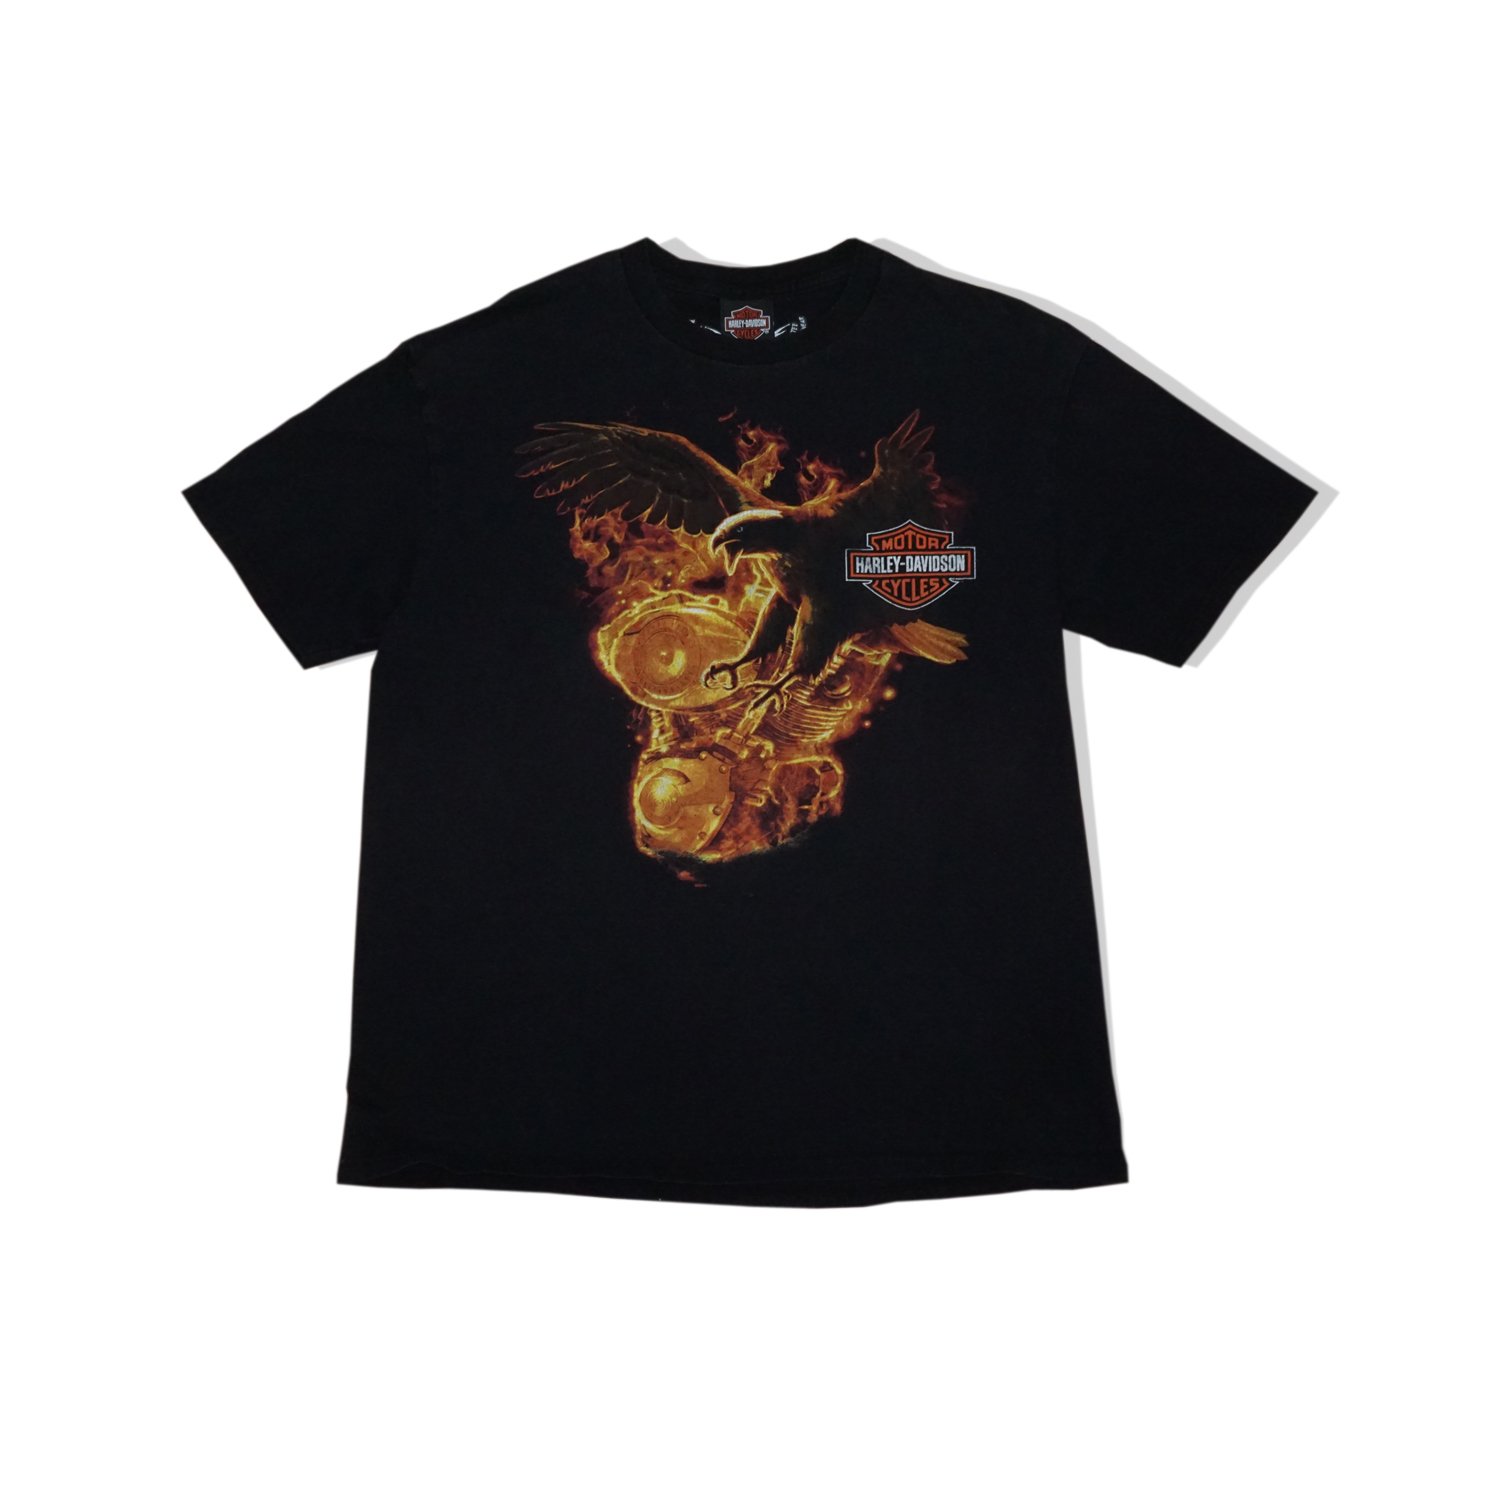 Retro Harley Davidson Rock N' Roll City T-Shirt (Sam Russo Collection)